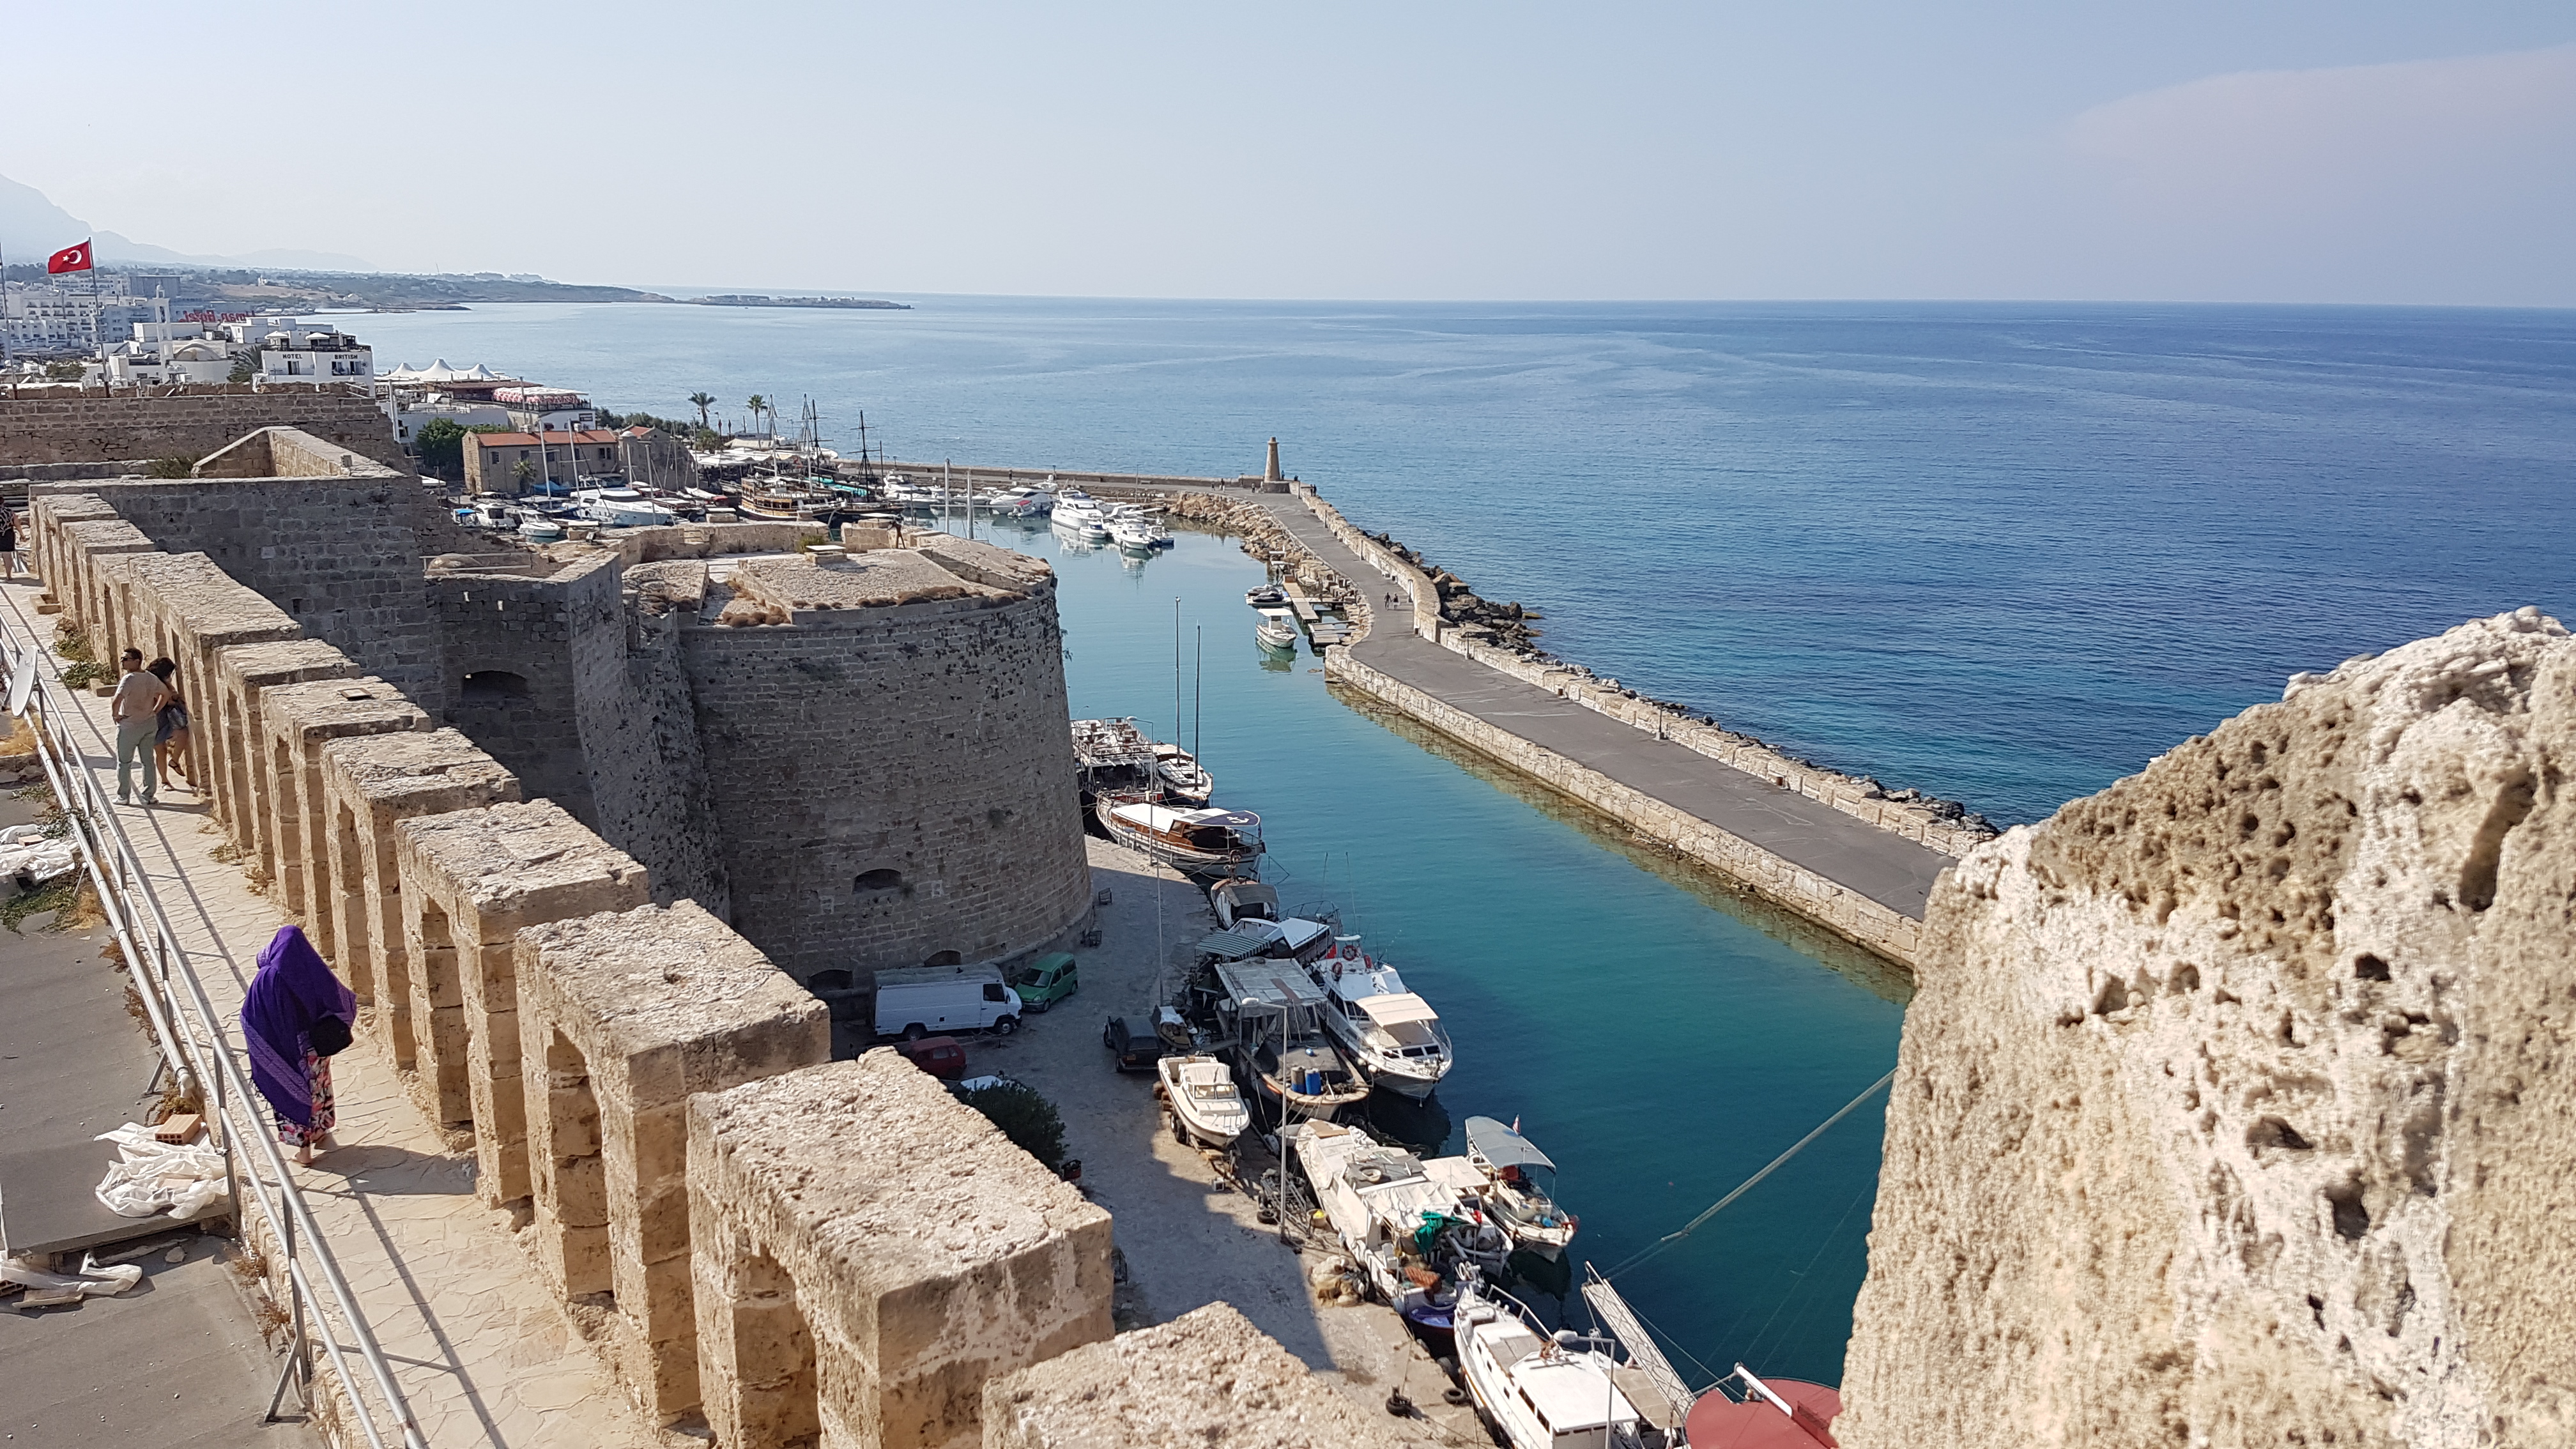 voyage a chypre sans passeport